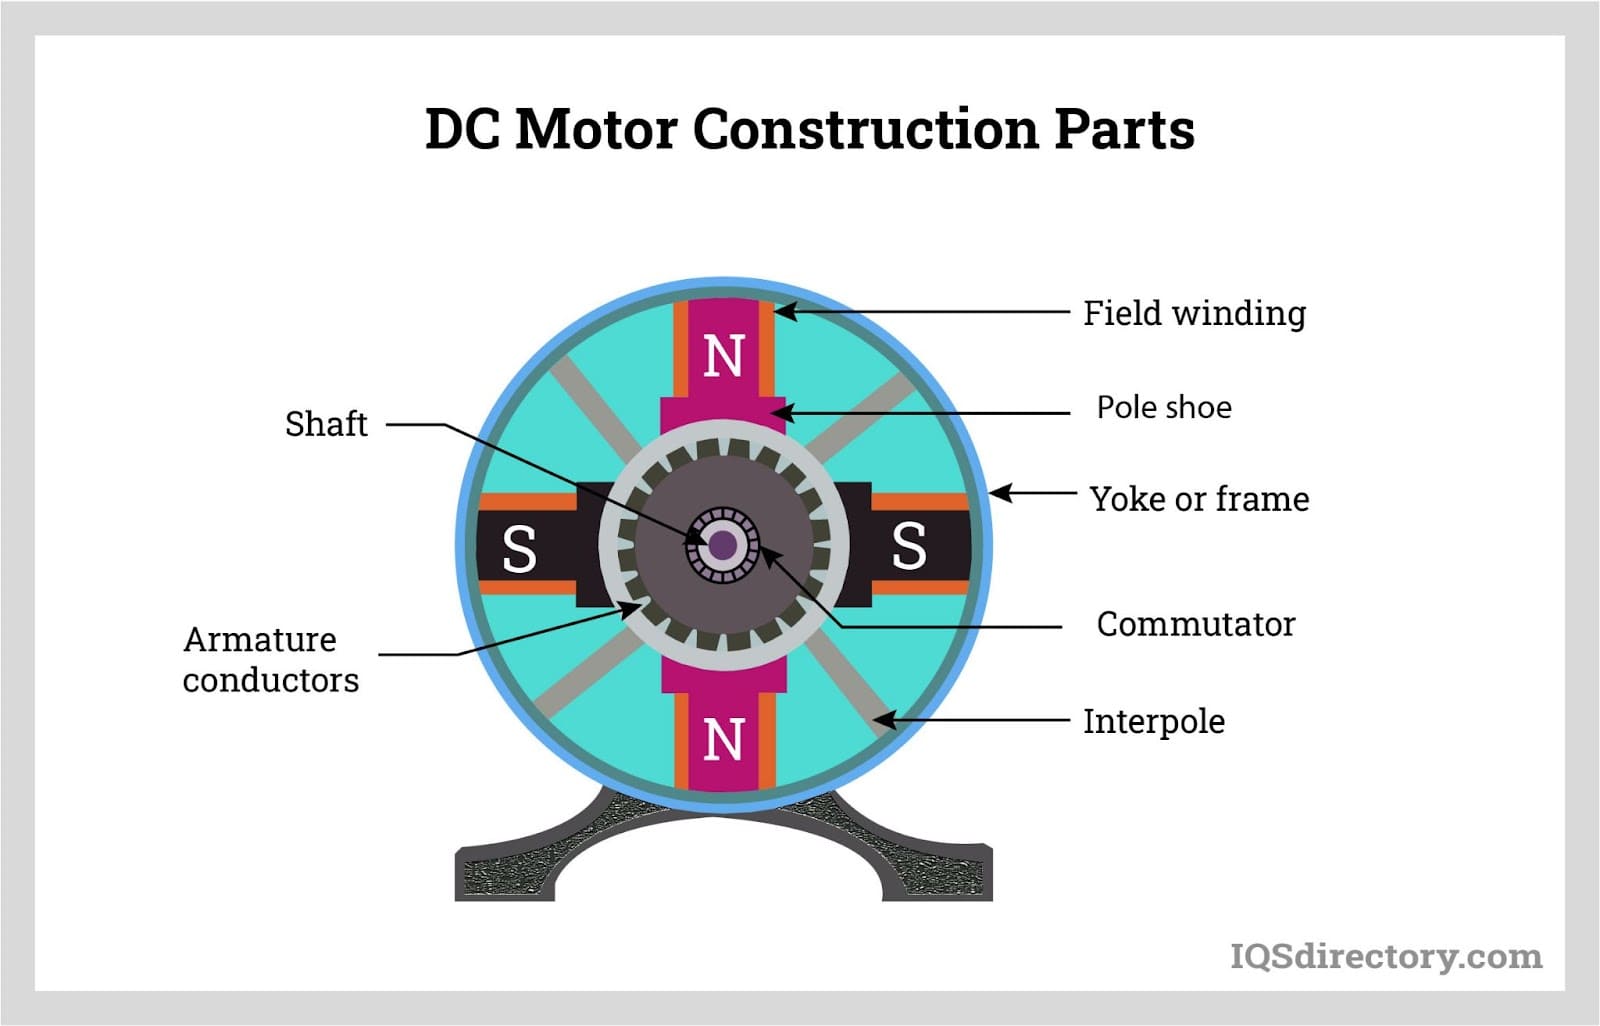 DC Motor Construction Parts